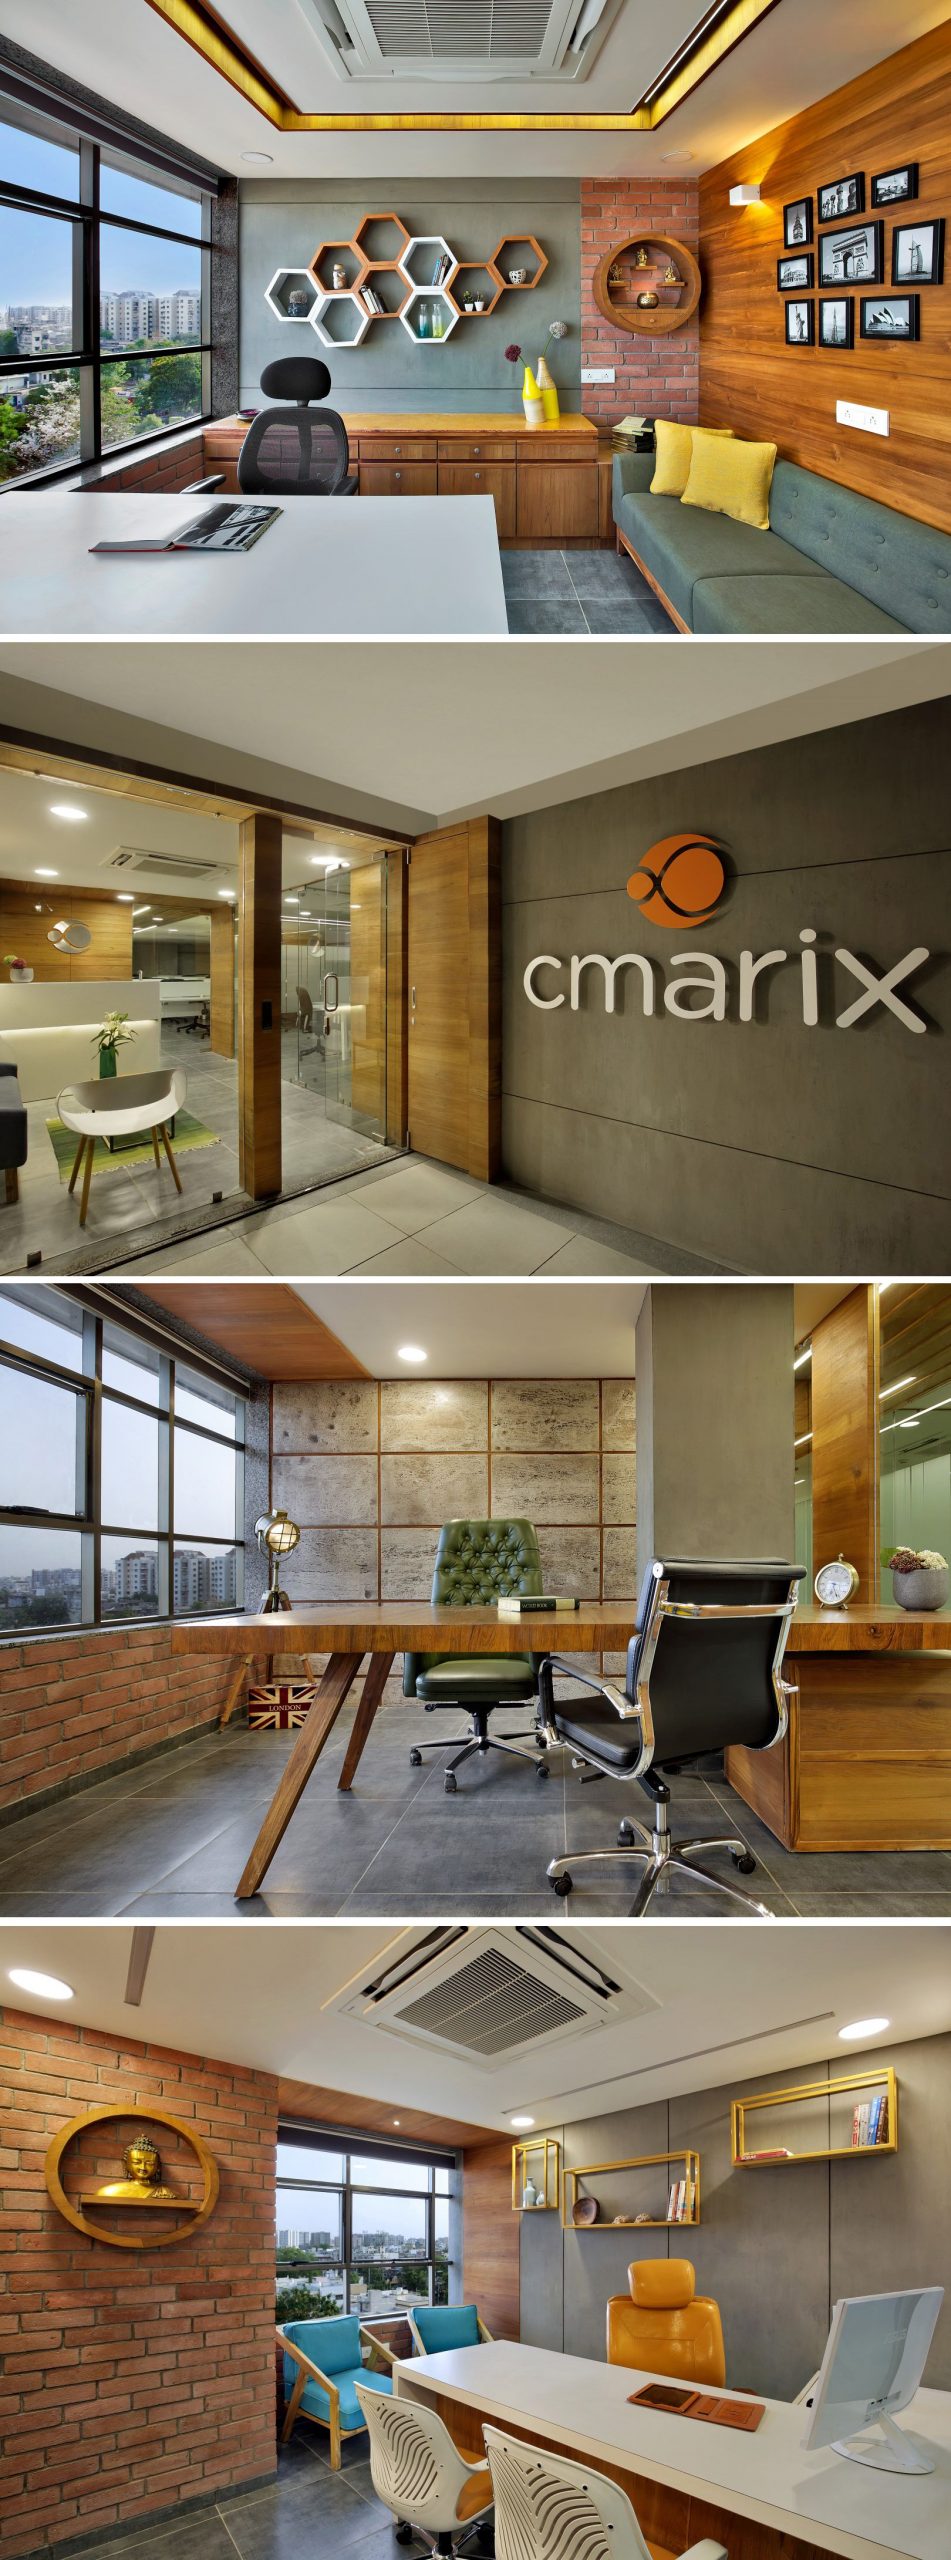 CMARIX Technolabs Office Interiors